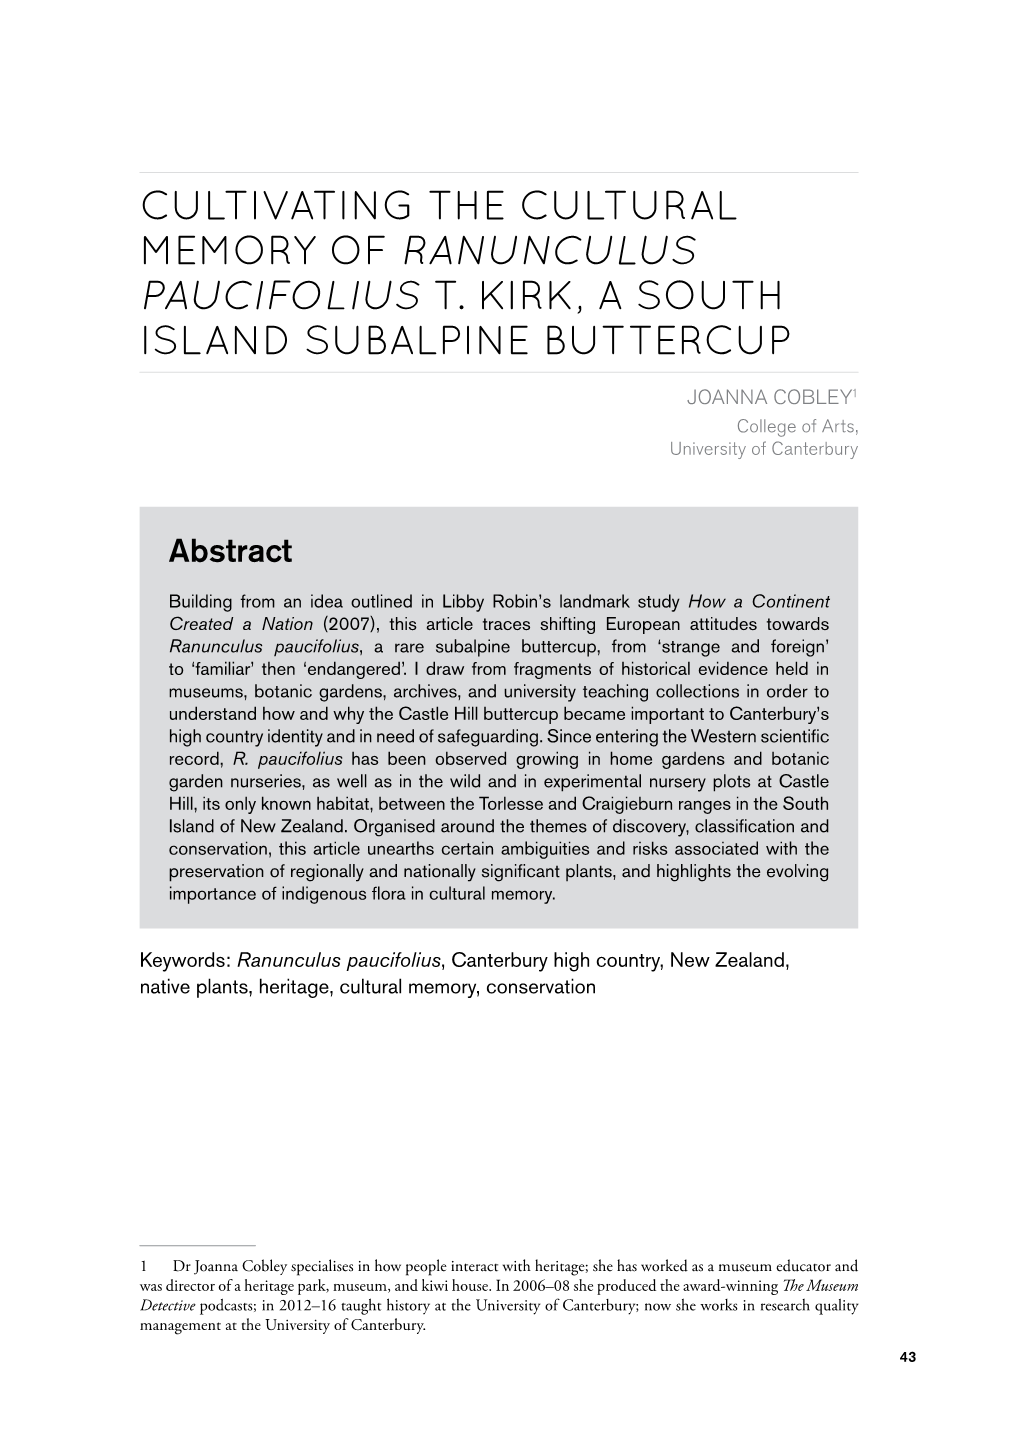 Cultivating the Cultural Memory of Ranunculus Paucifolius T